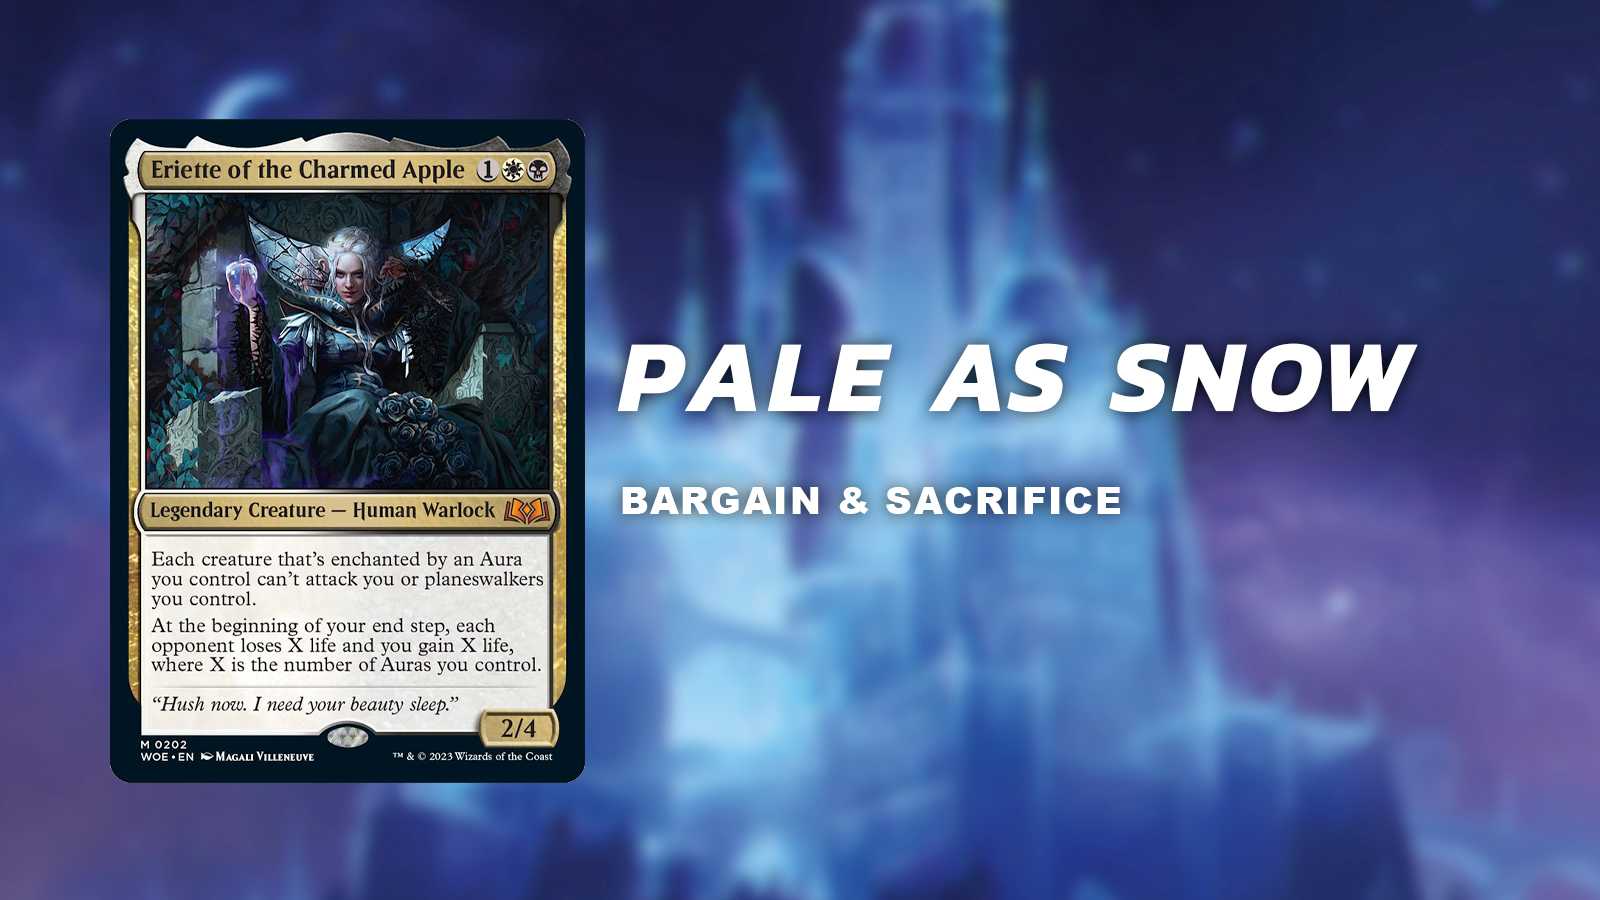 pale as snow (bargain & sacrifice)